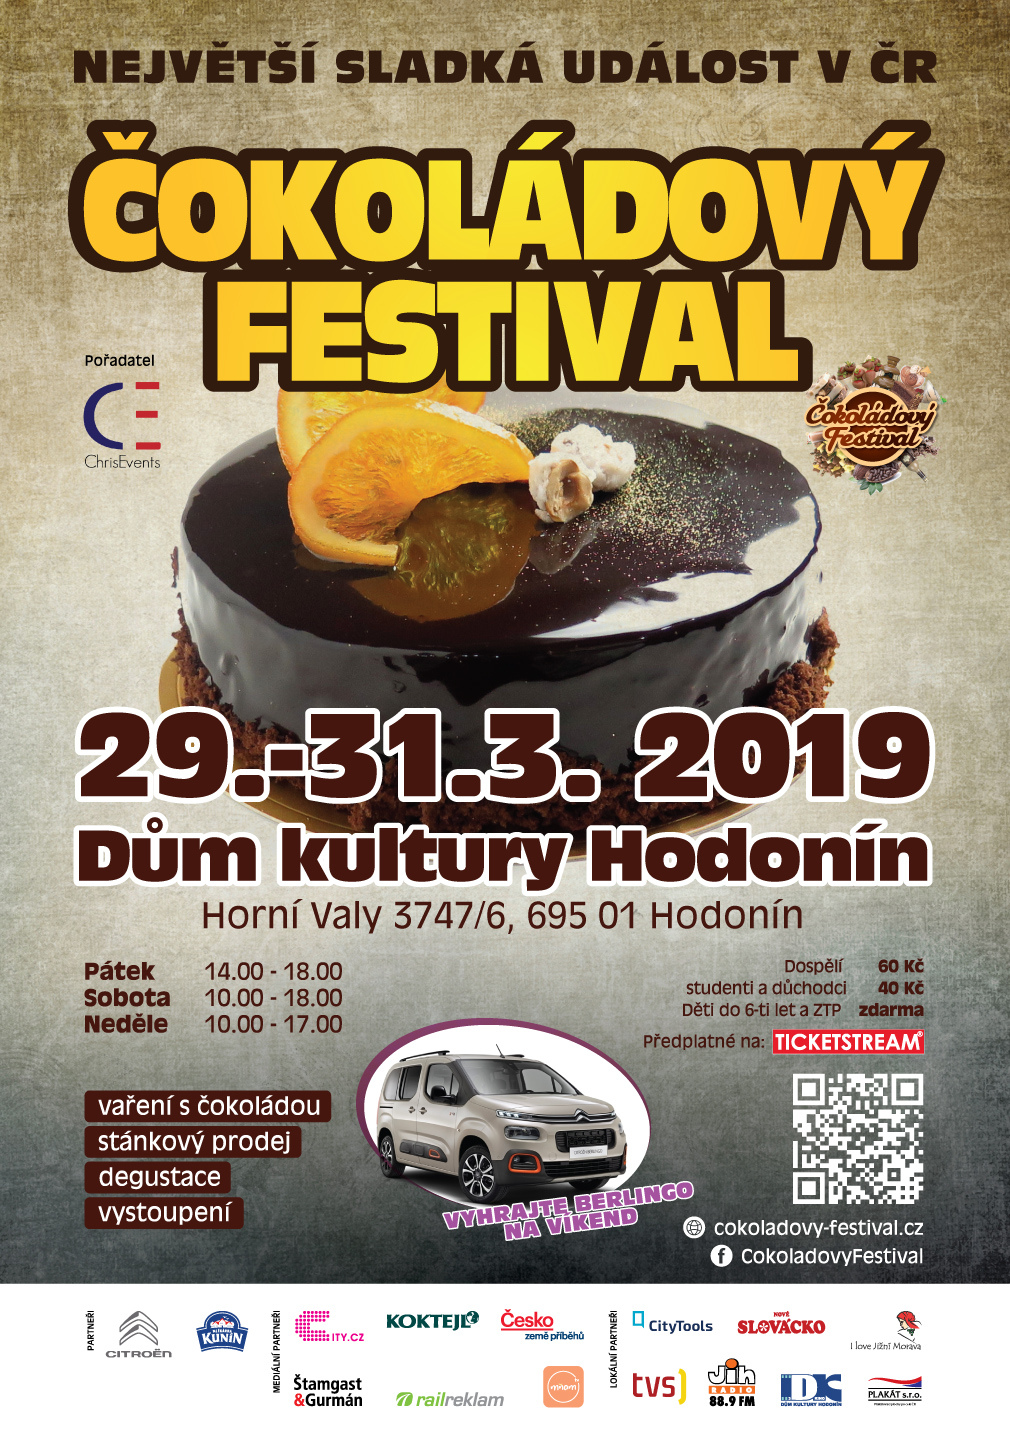 Hodonin Cokoladovy festival